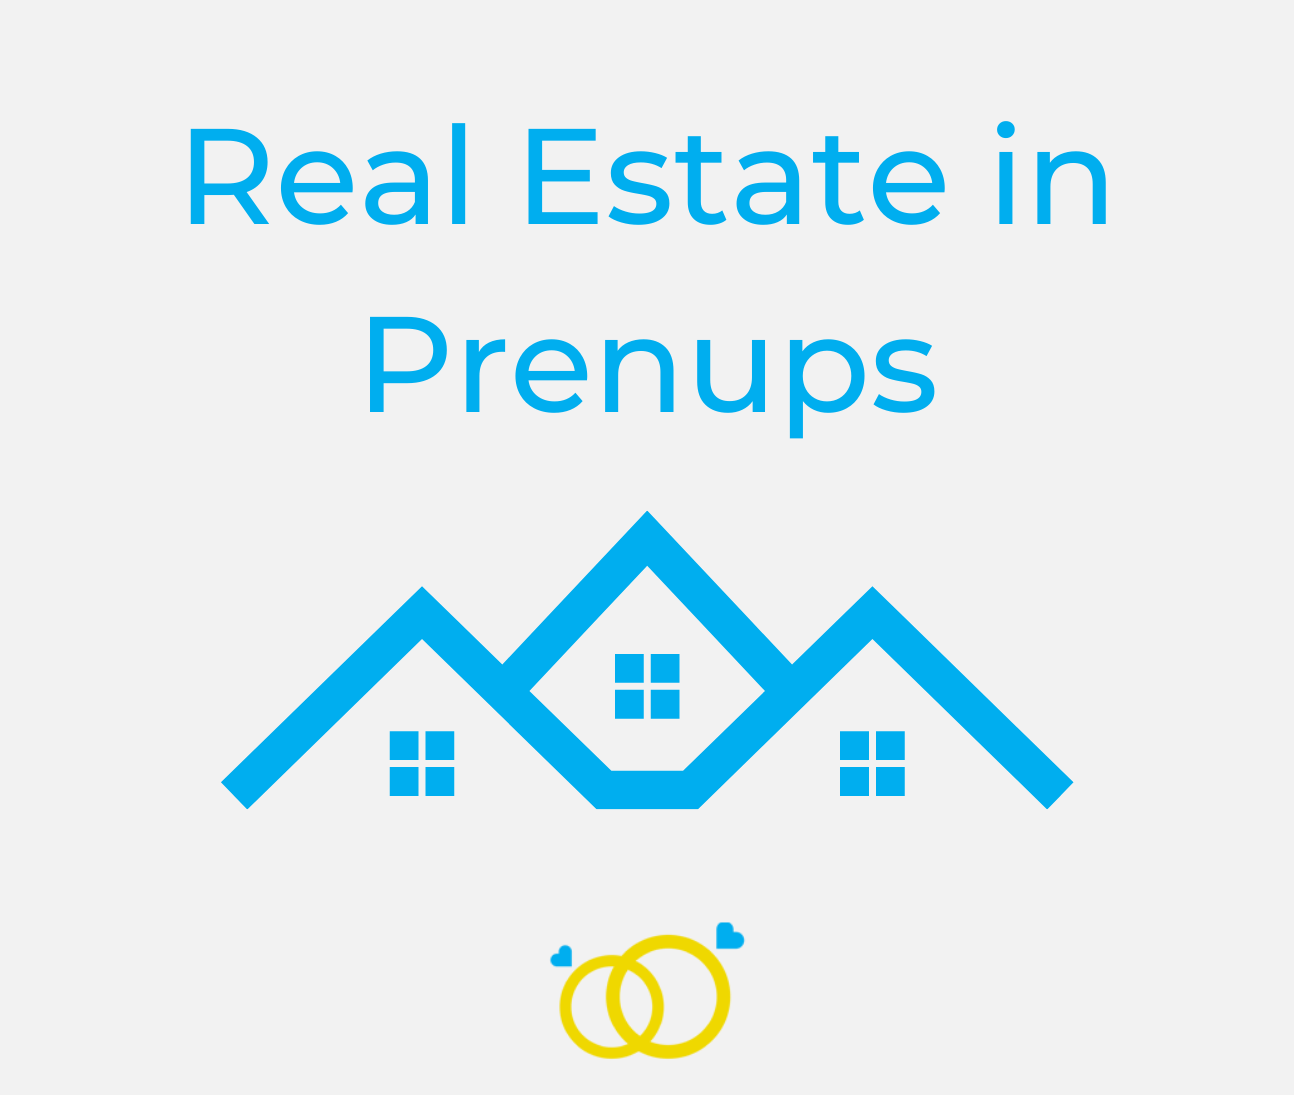 Real Estate in Prenups